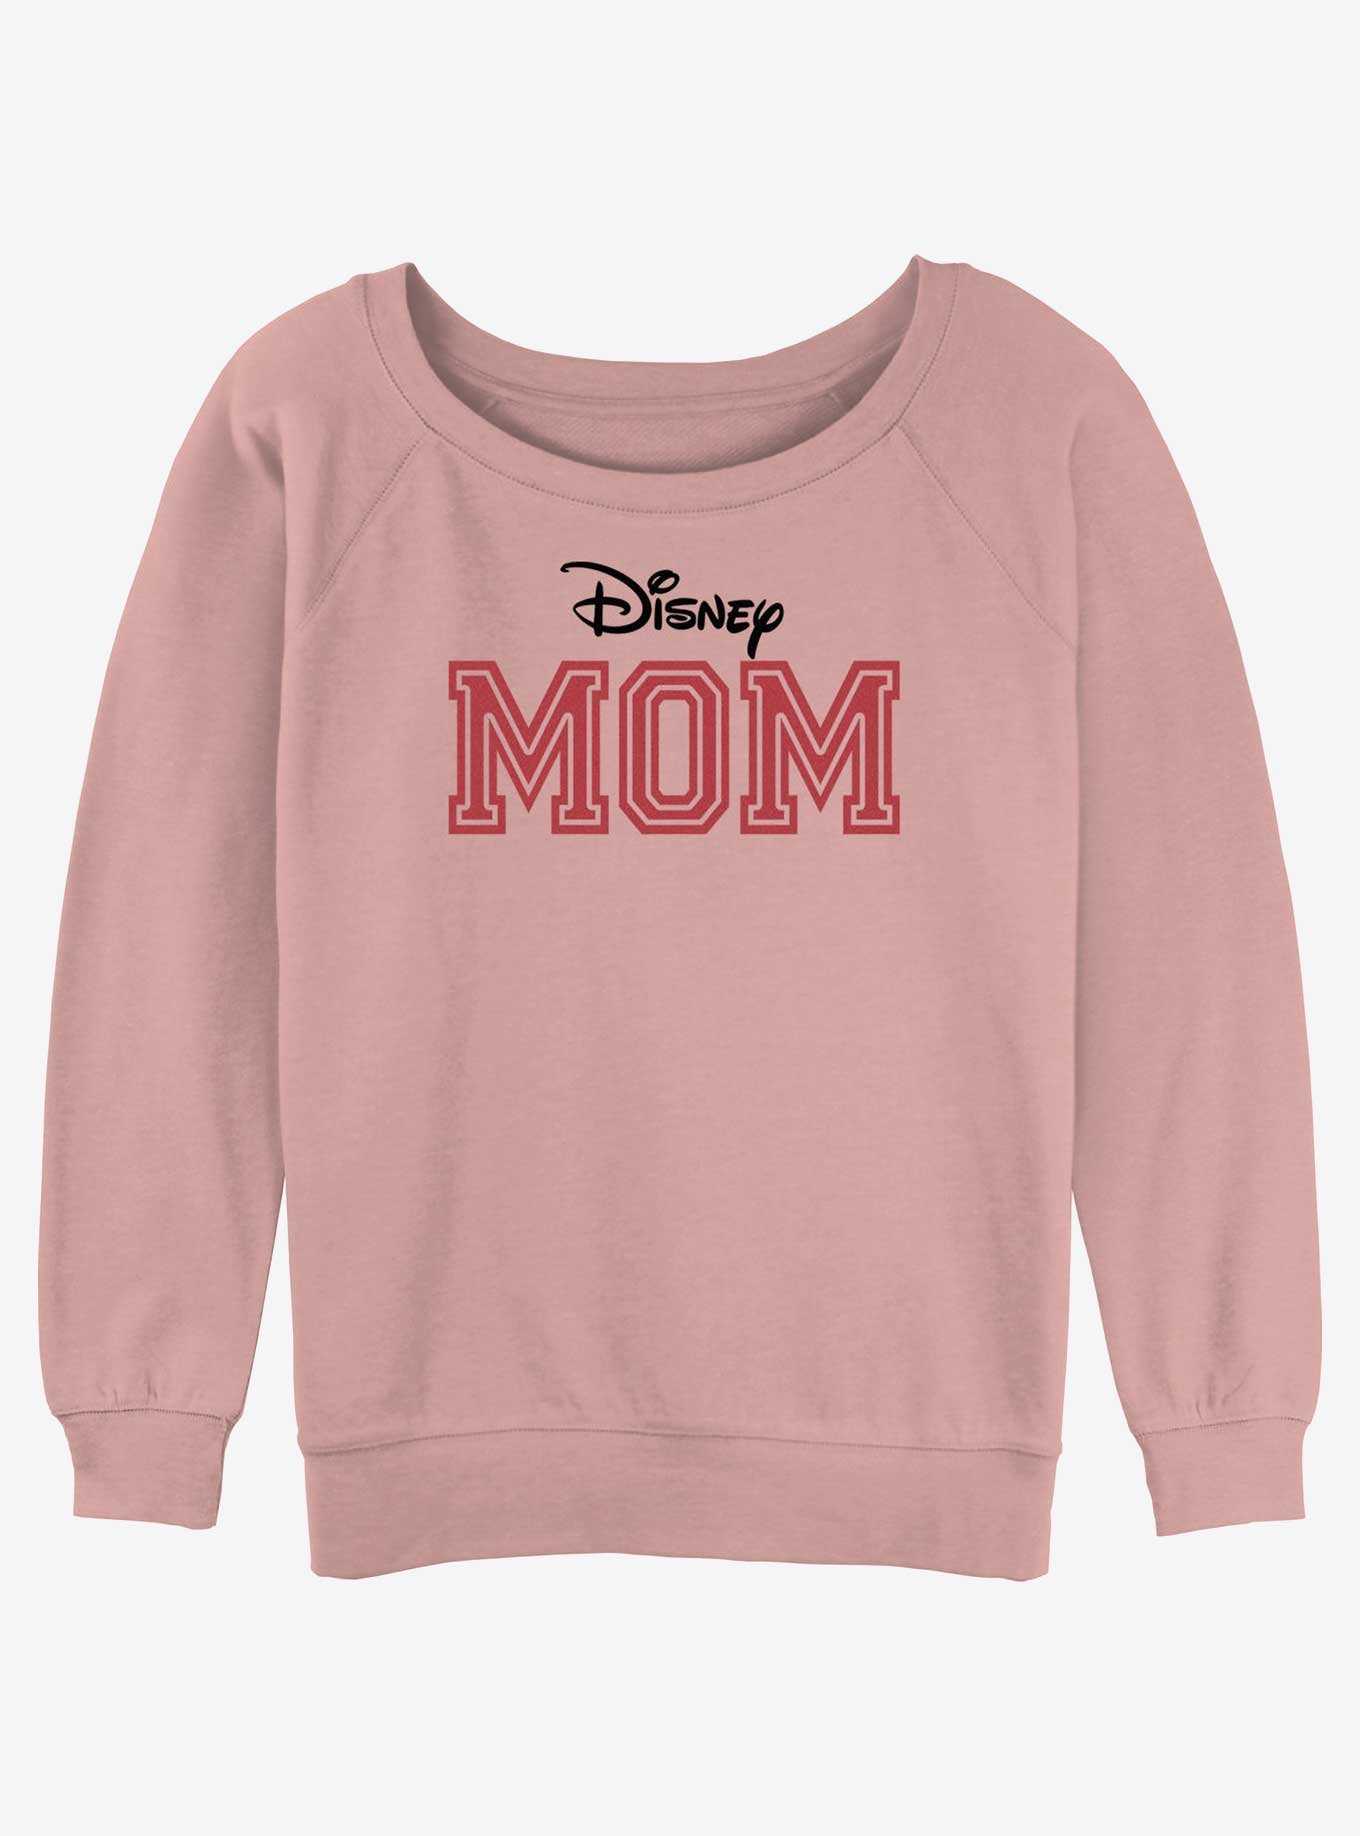 Disney Mickey Mouse Disney Mom Girls Slouchy Sweatshirt, , hi-res